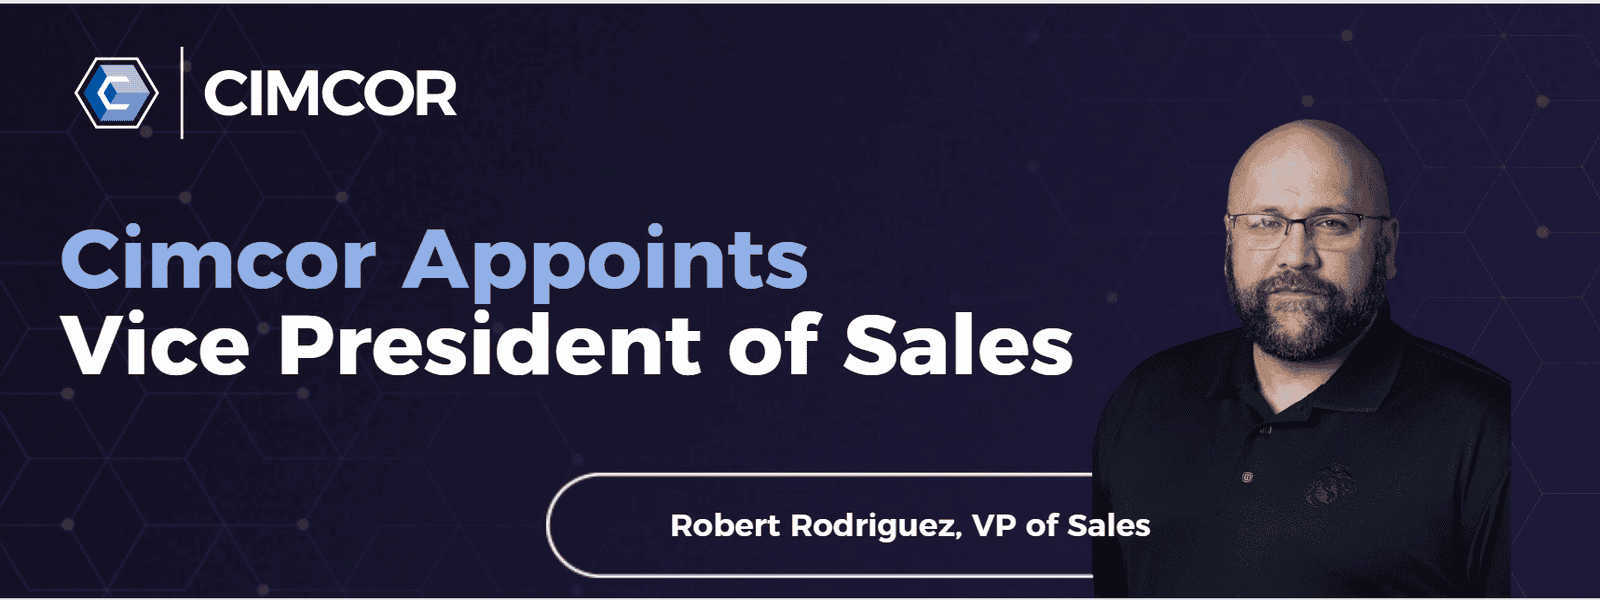 Cimcor VP of Sales Robert Rodriguez